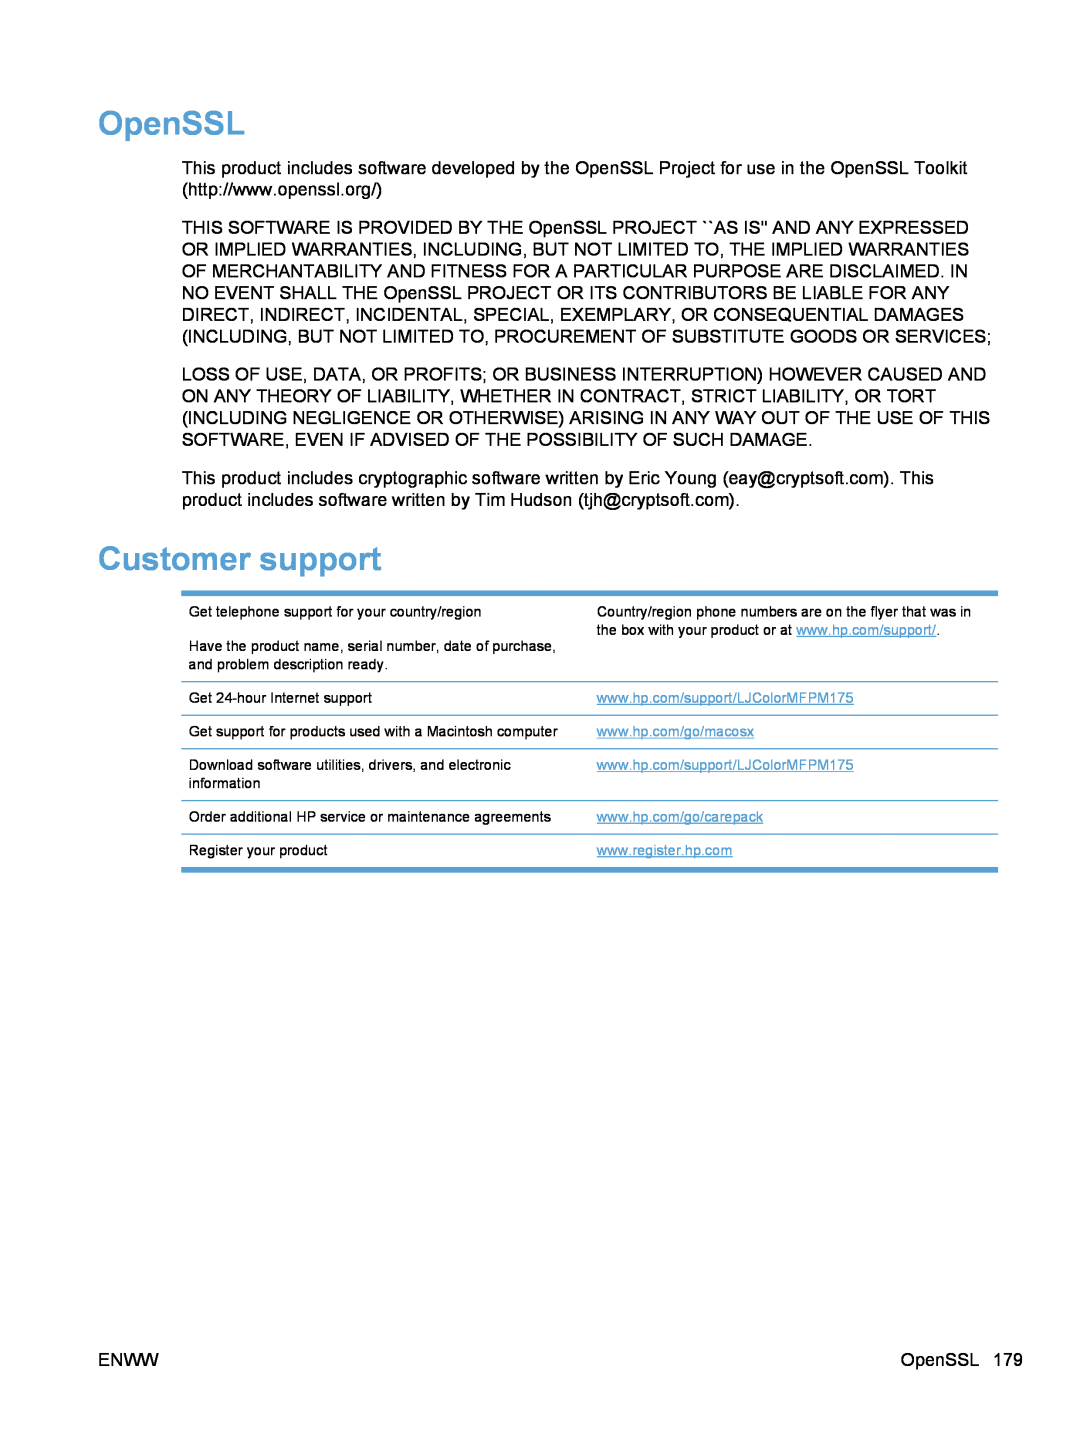 HP 100 COLOR MFP M175, 100 COLOR CE866ABGJ, 100 CE866ARBGJ manual OpenSSL, Customer support 